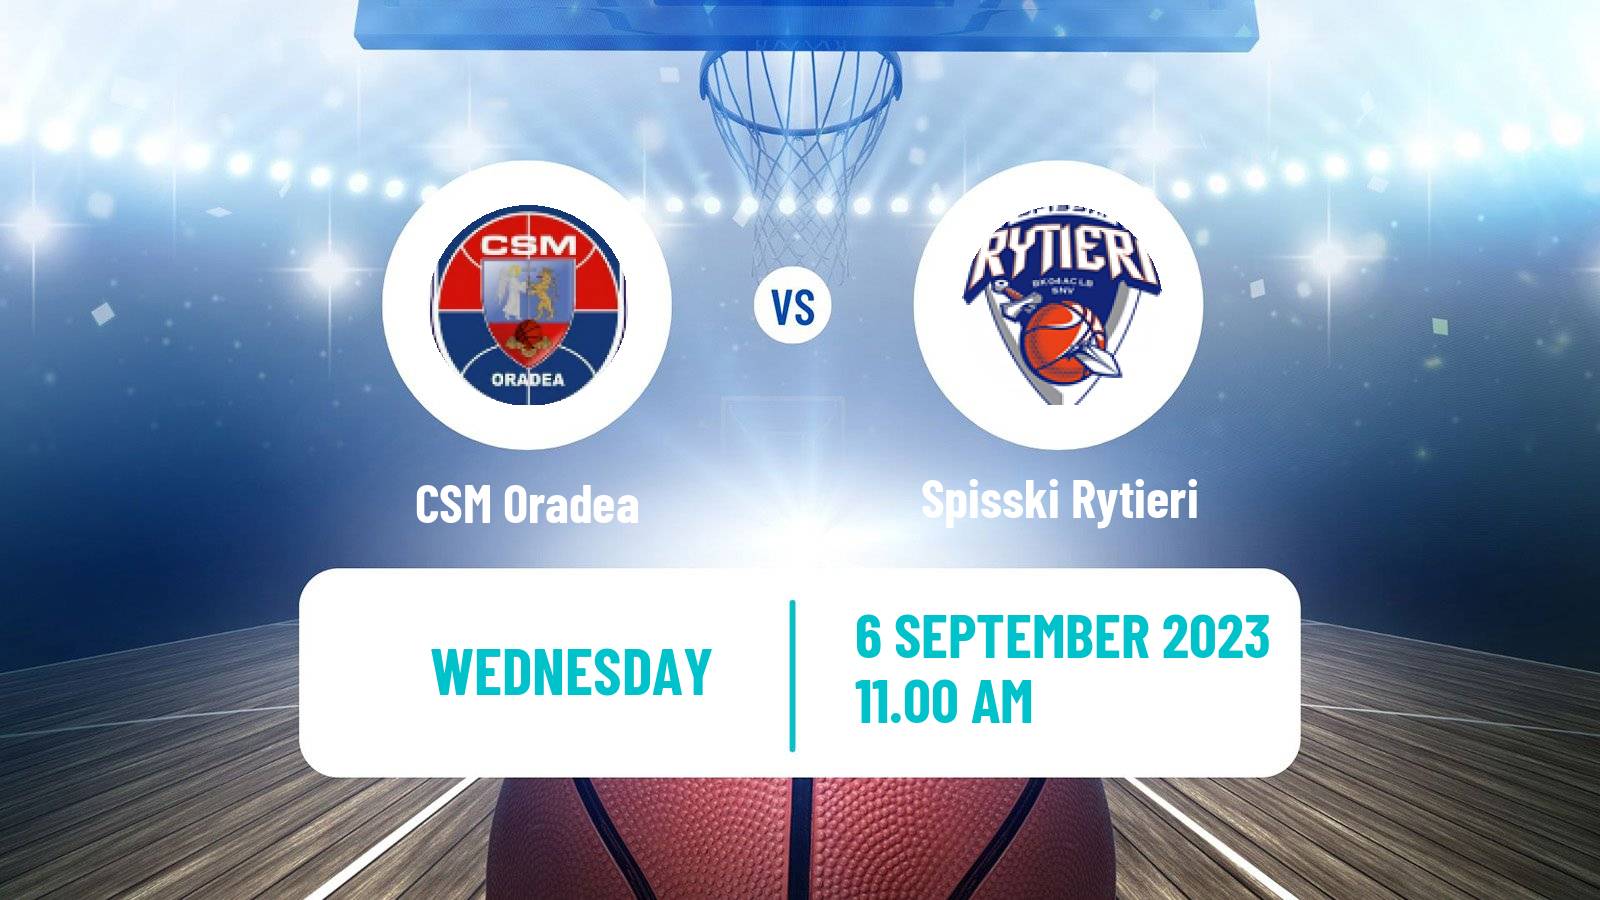 Basketball Club Friendly Basketball CSM Oradea - Spisski Rytieri